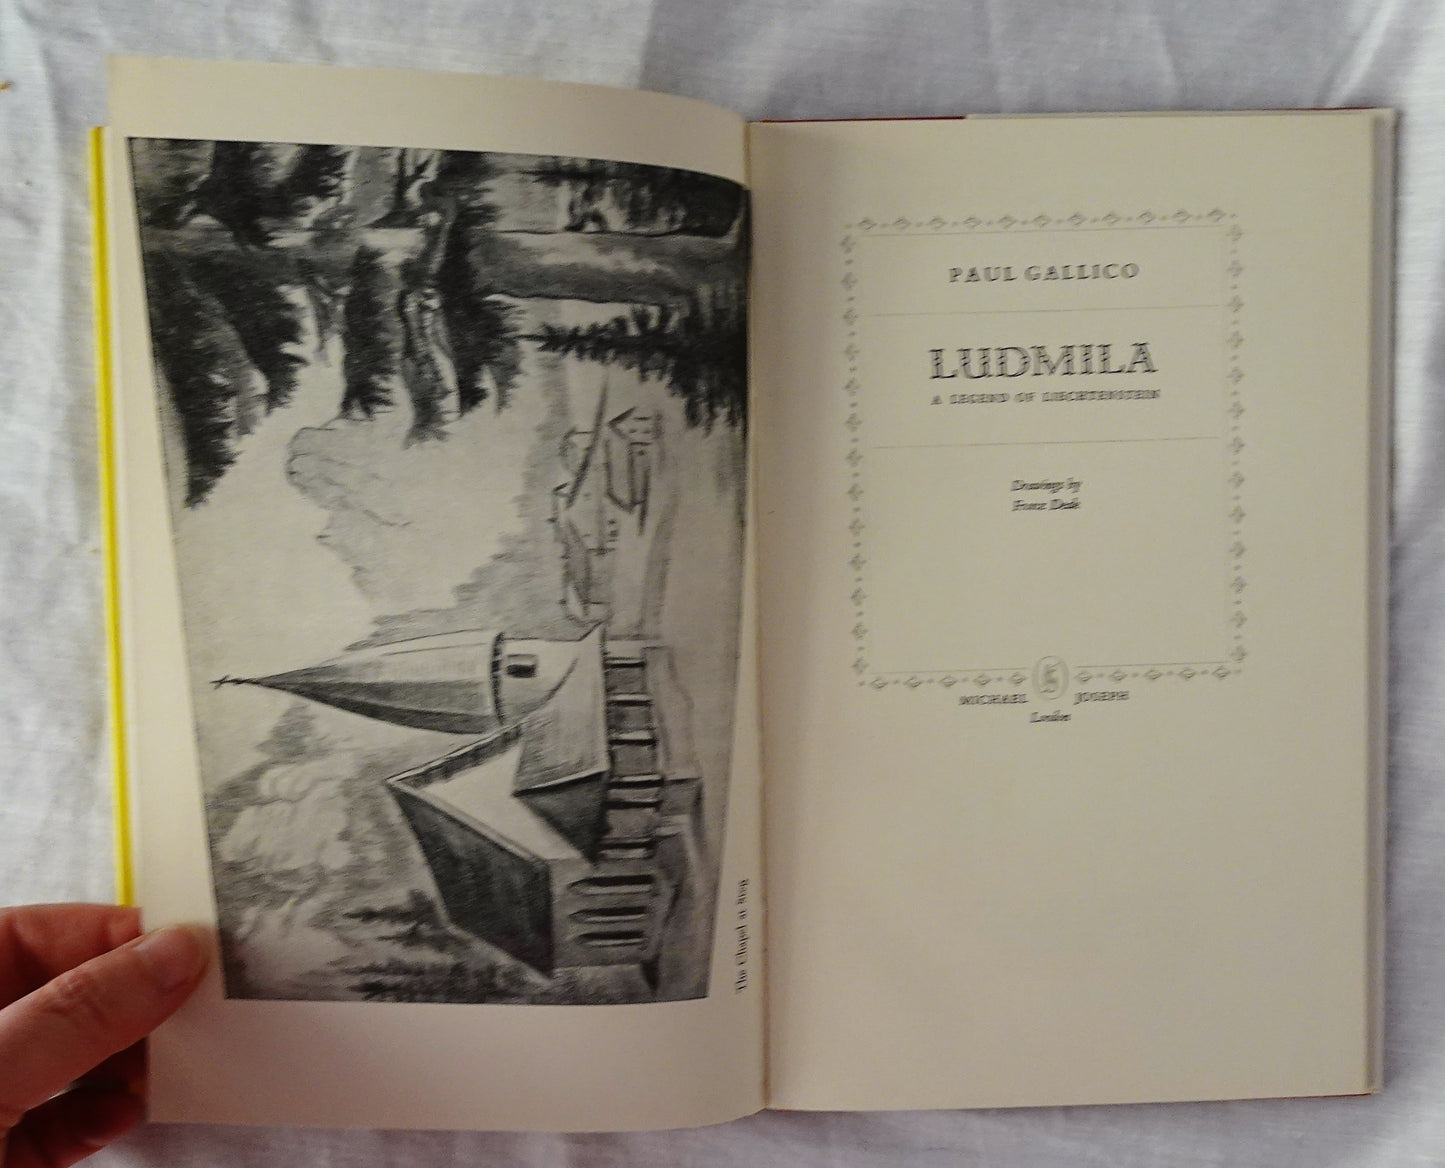 Ludmila by Paul Gallico